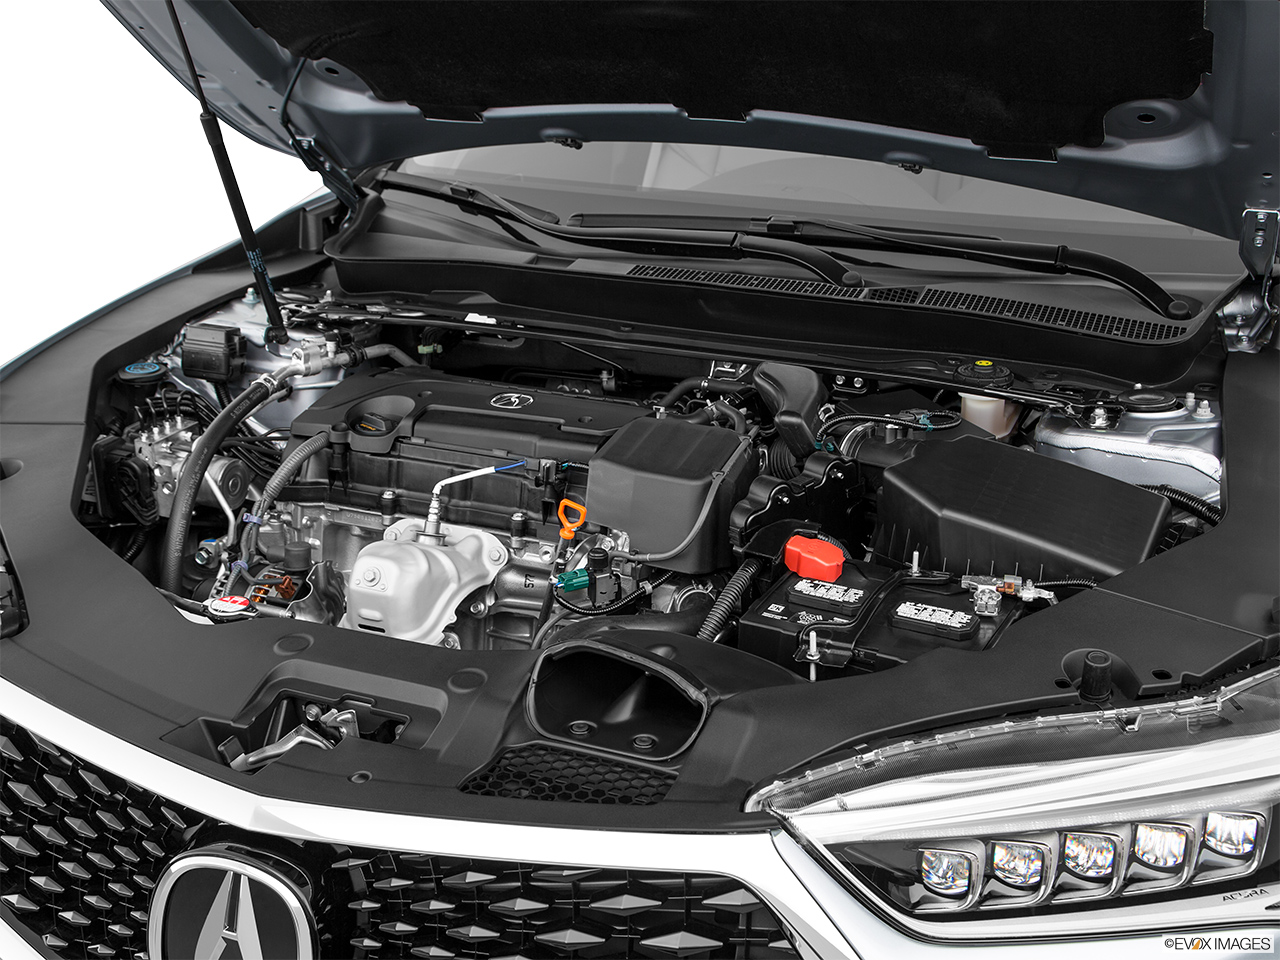 2019 Acura TLX 2.4 8-DCT P-AWS Engine. 